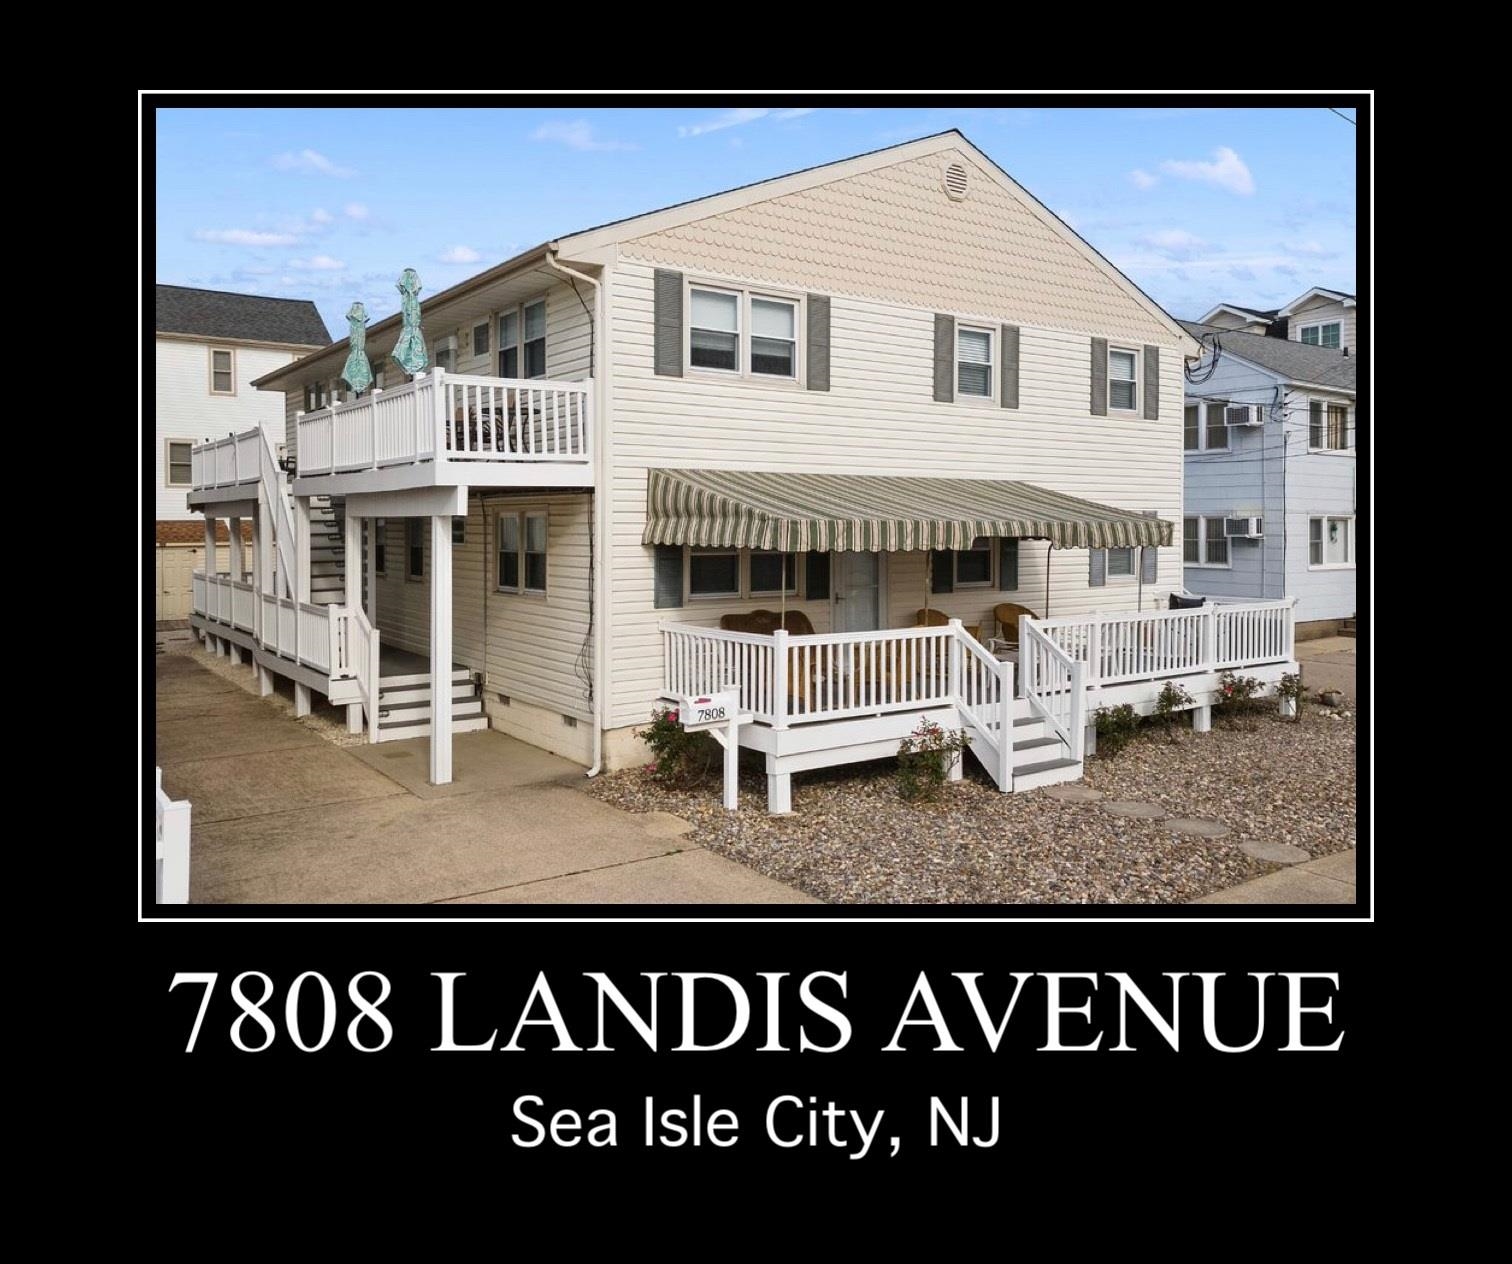 7808 Landis Avenue - Sea Isle City